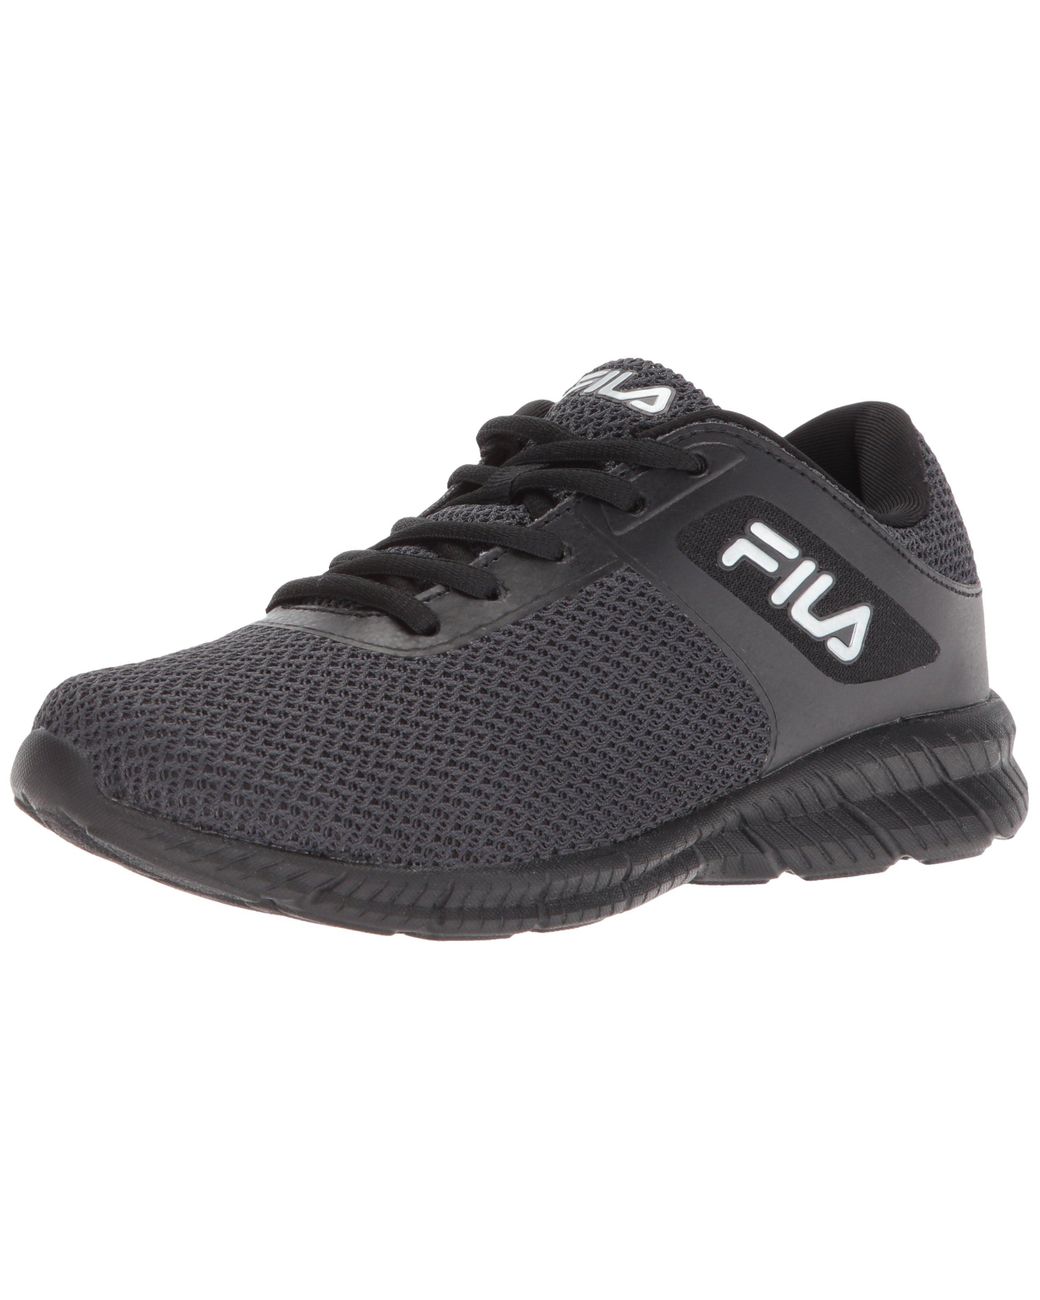 Fila Leather Memory Skip Running Shoe in Black/Dark Silver/Black (Black) -  Save 38% - Lyst